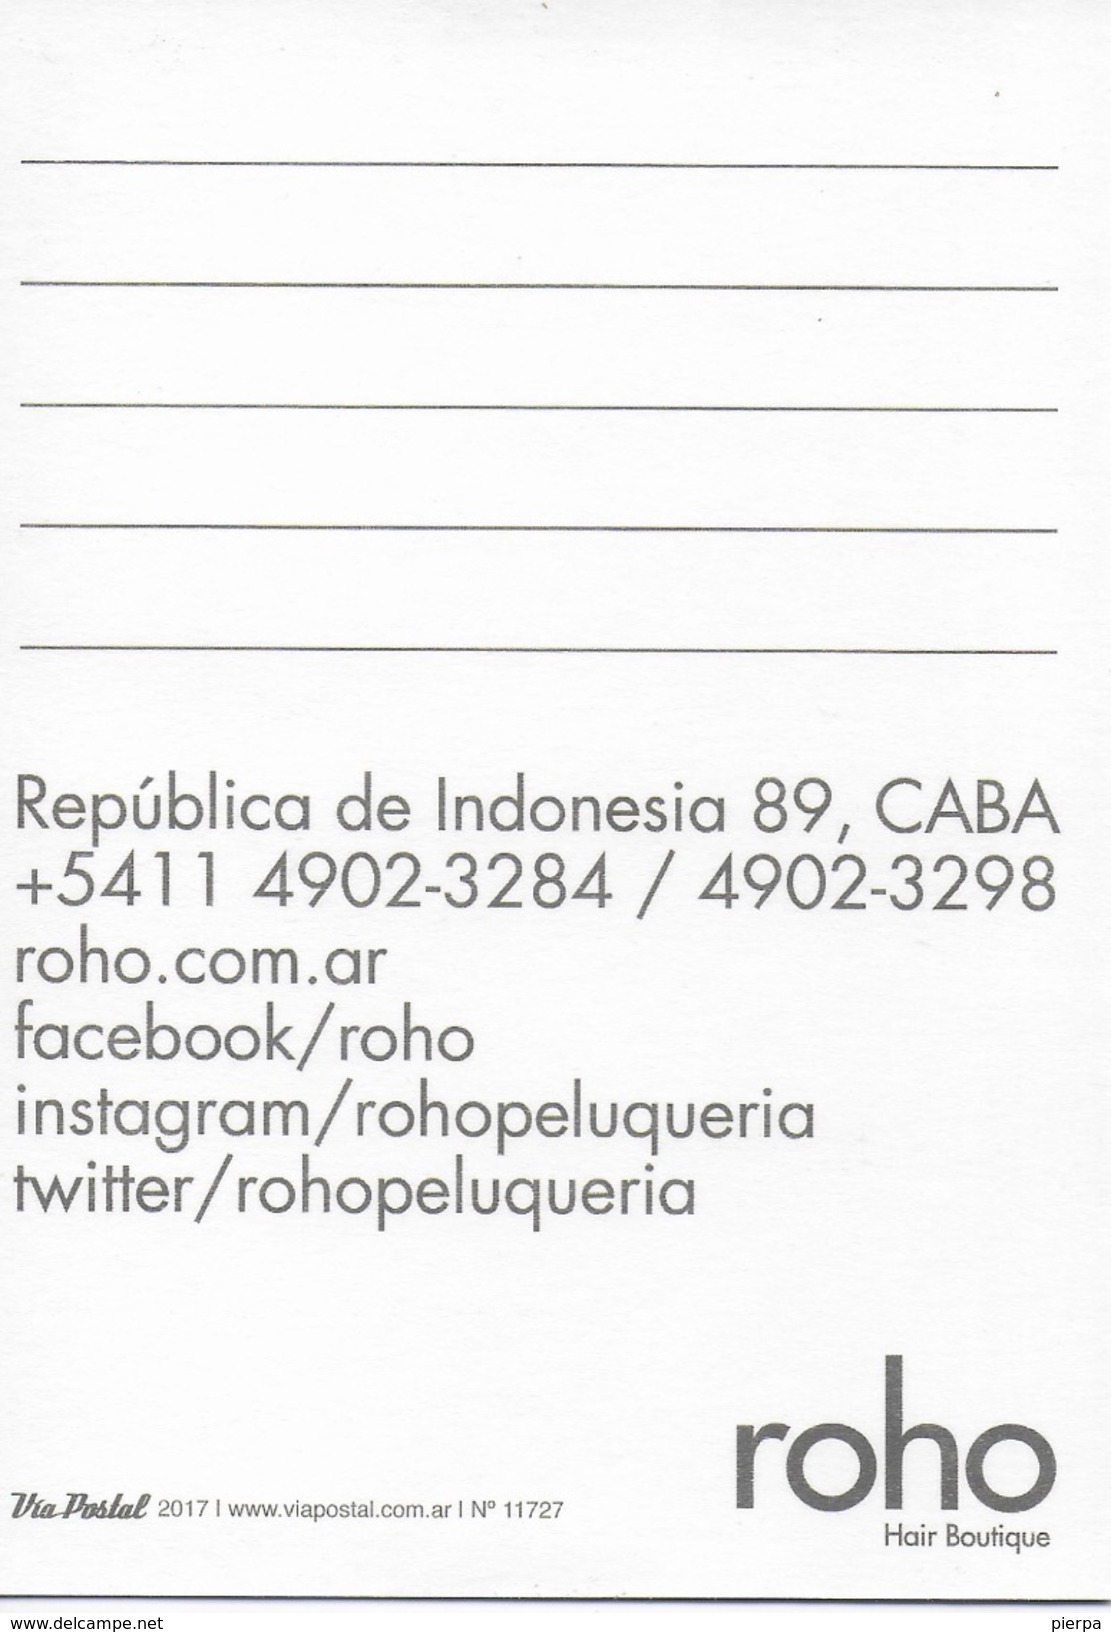 ROHO HAIR BOUTIQUE - ARGENTINA - Moda